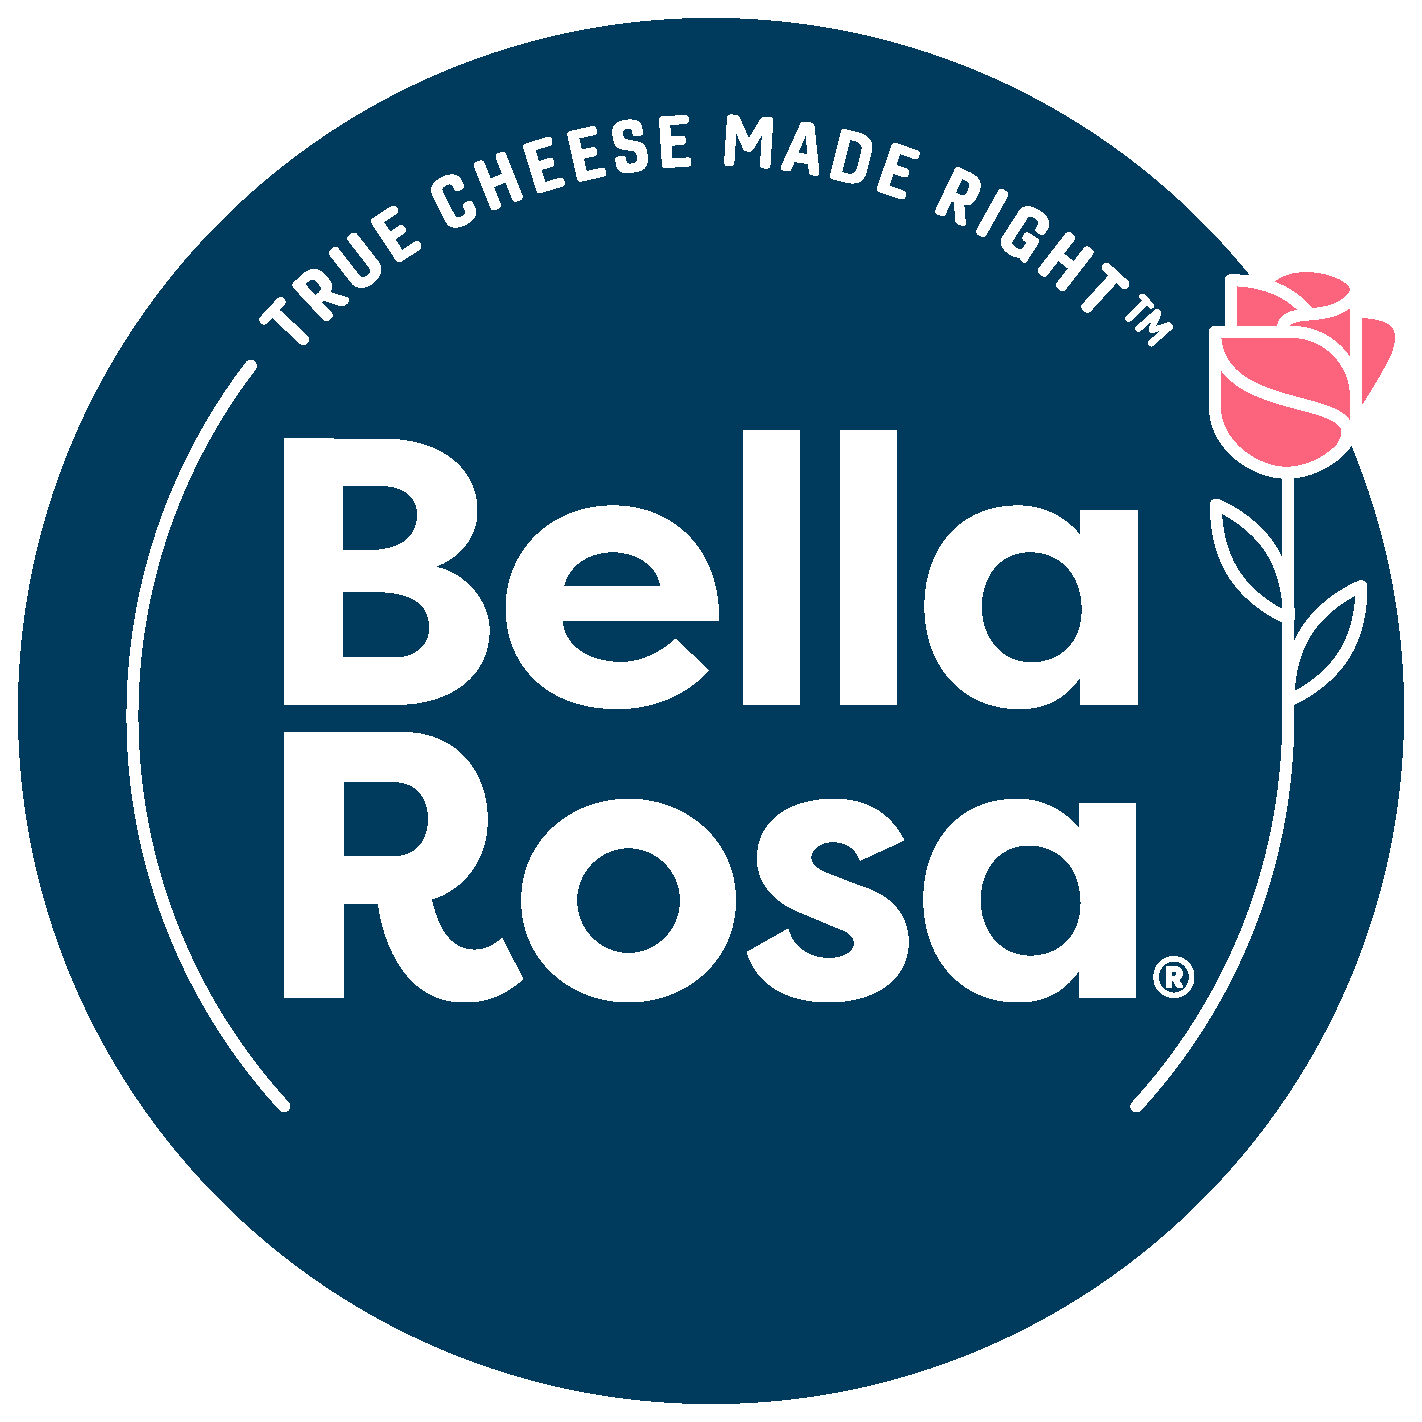 Bella Rosa Cheese